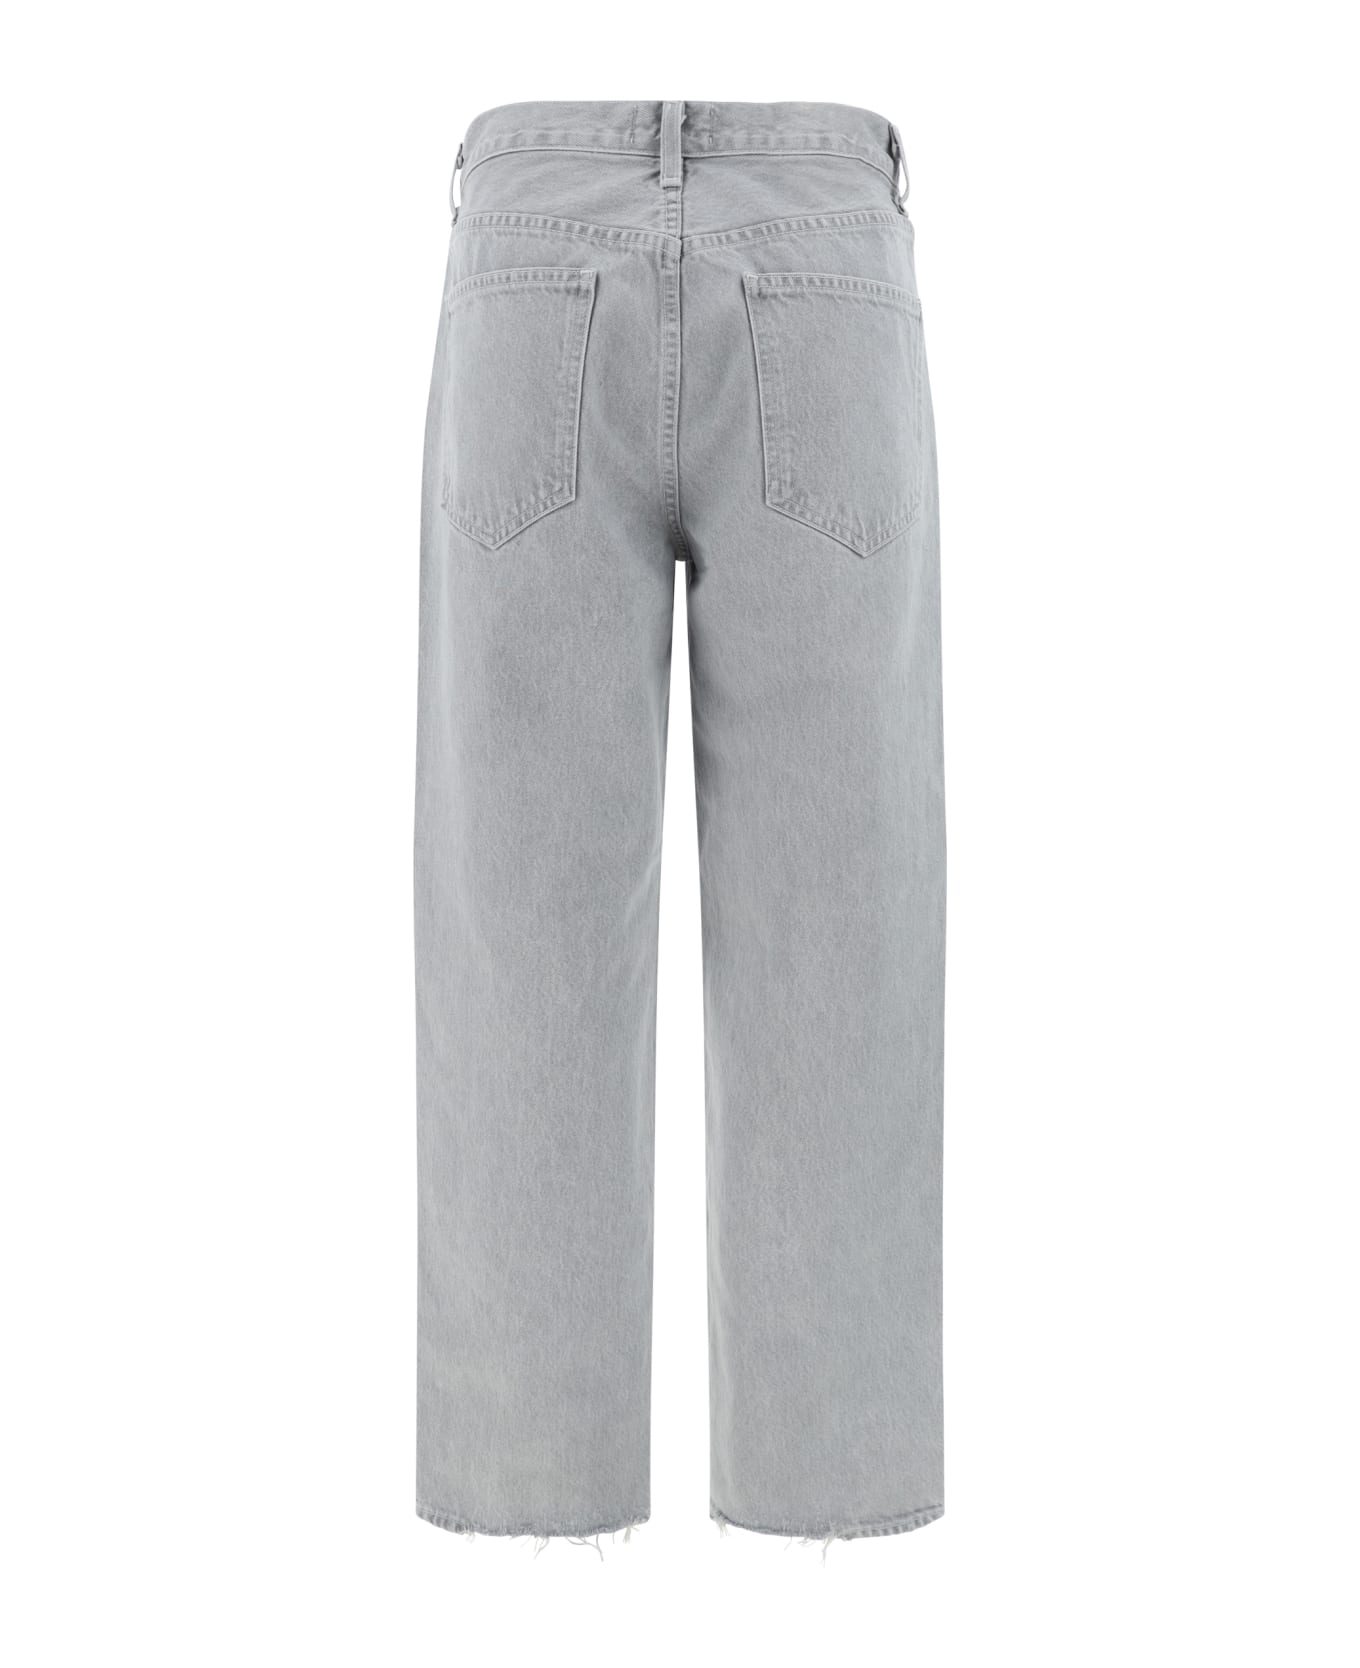 AGOLDE Criss Cross Jeans - Rain (marbled Med Grey)